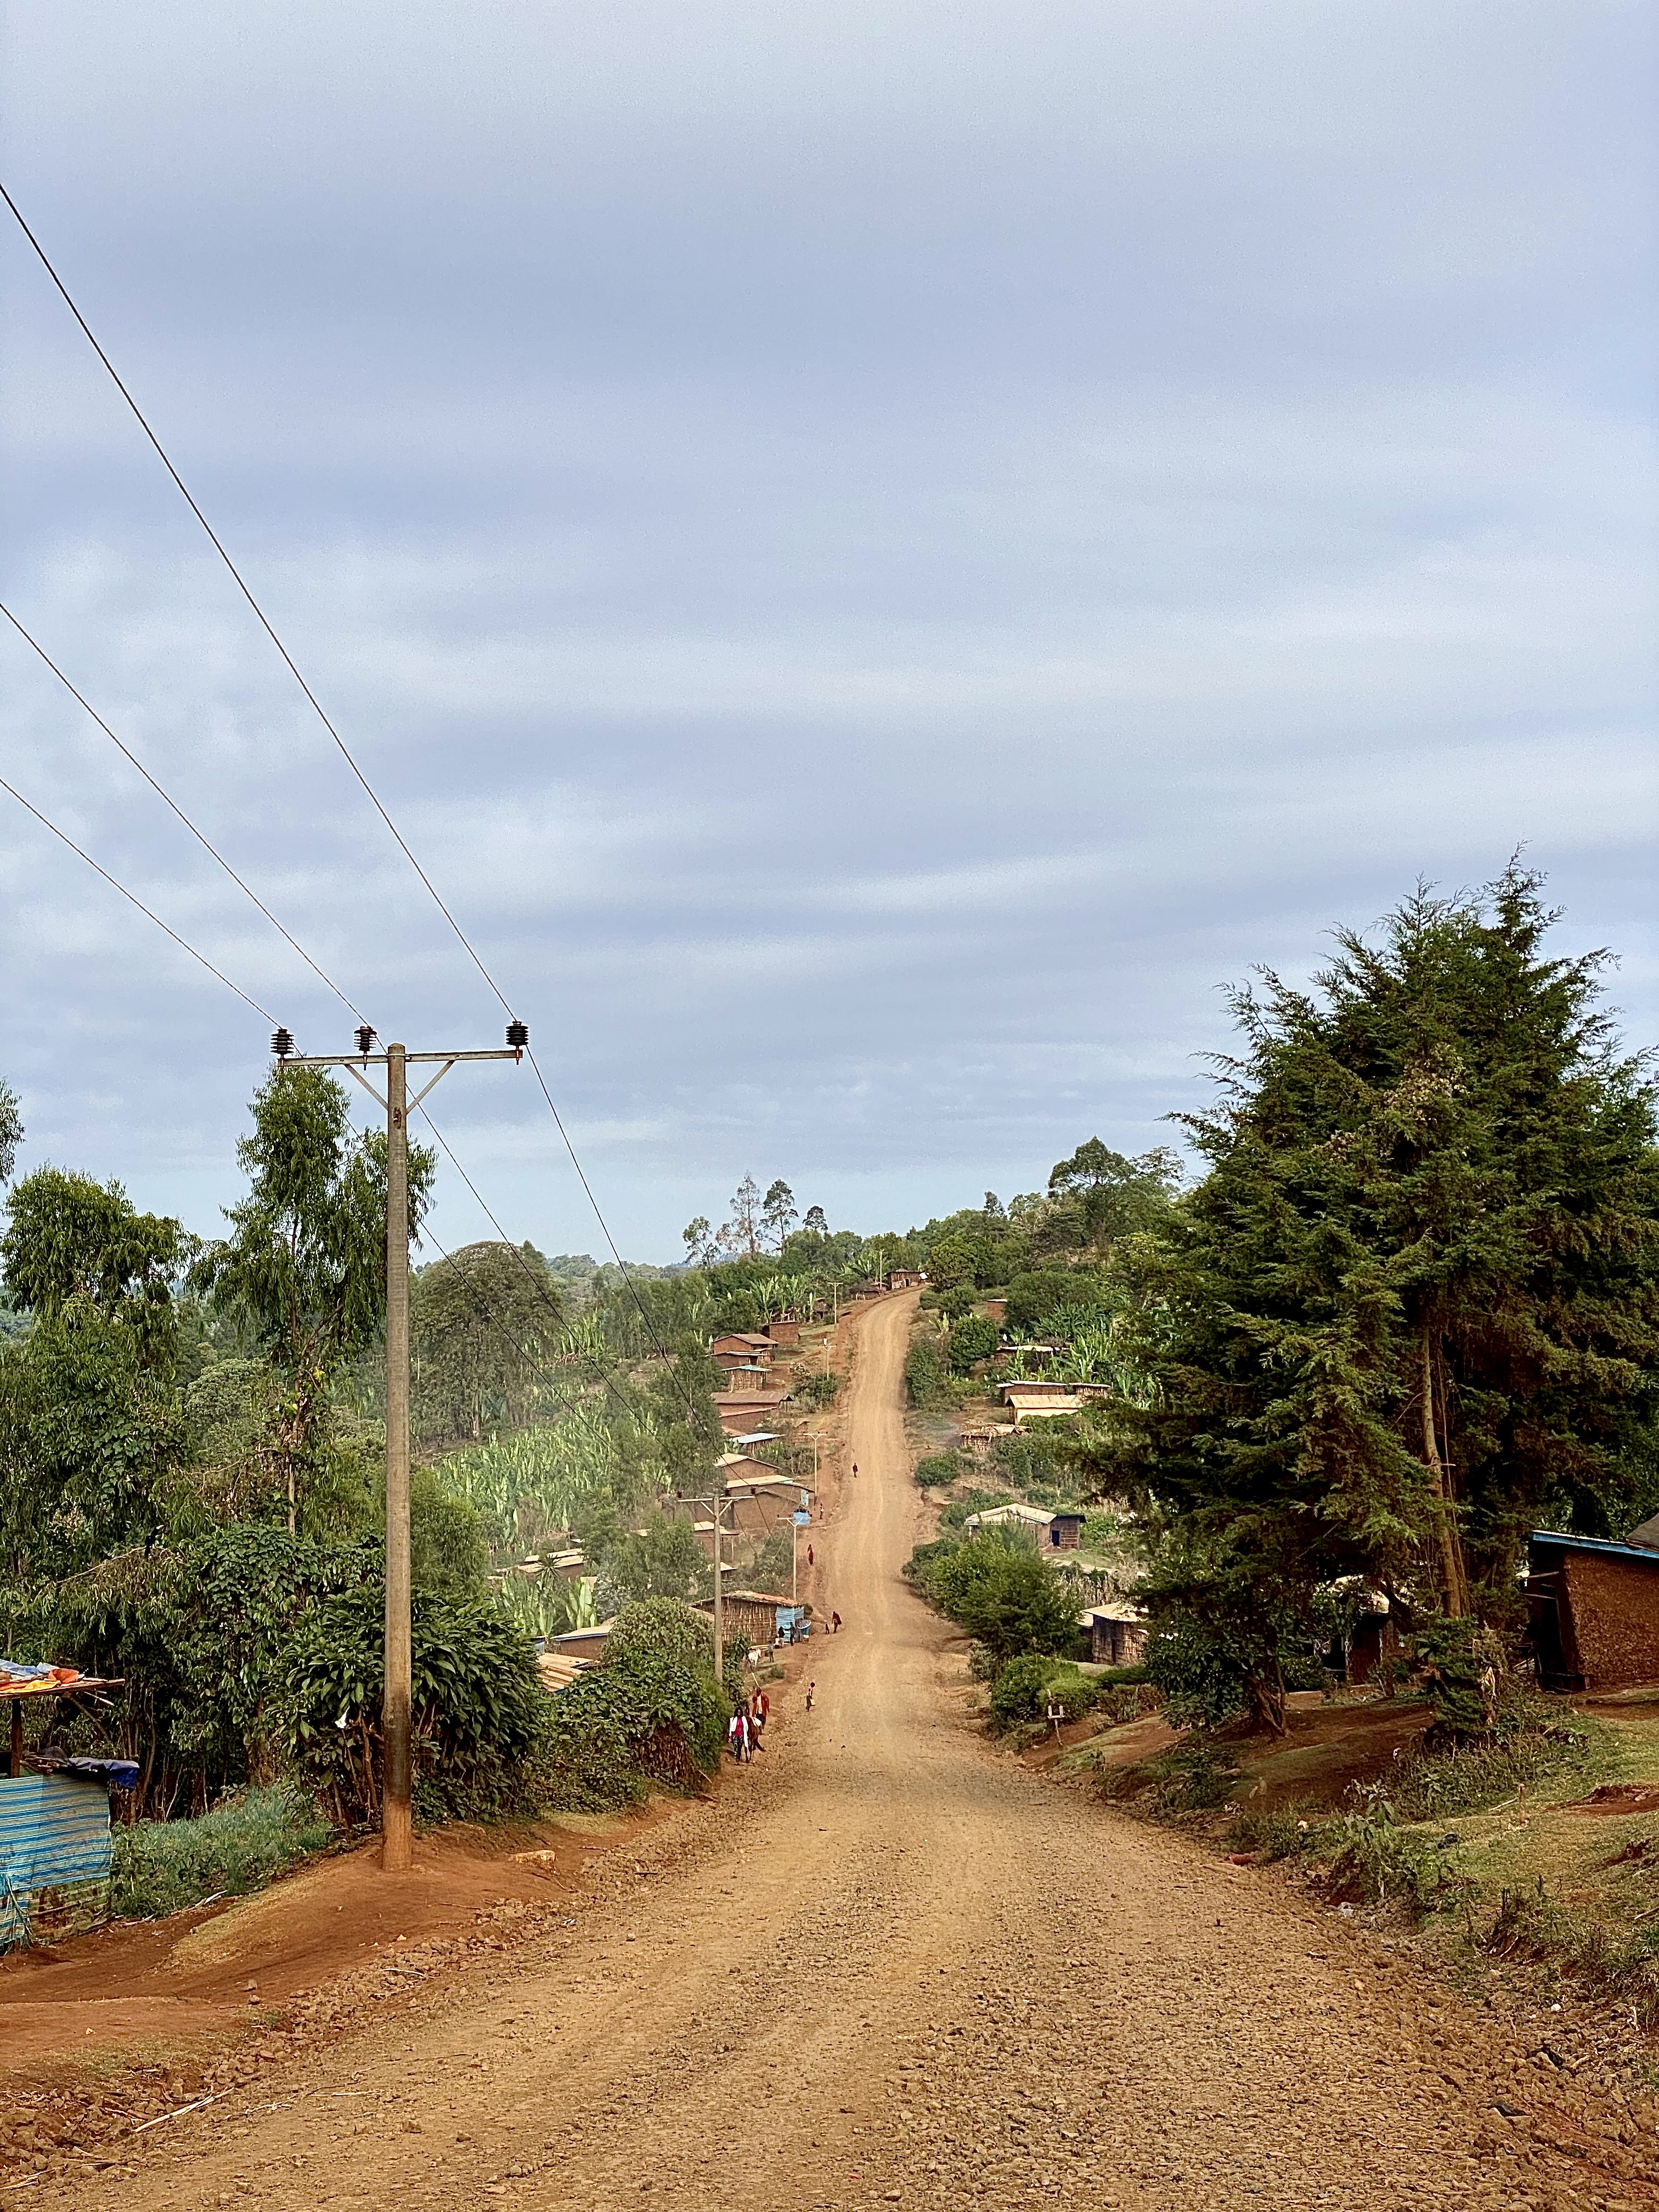 Driving in Ethiopia